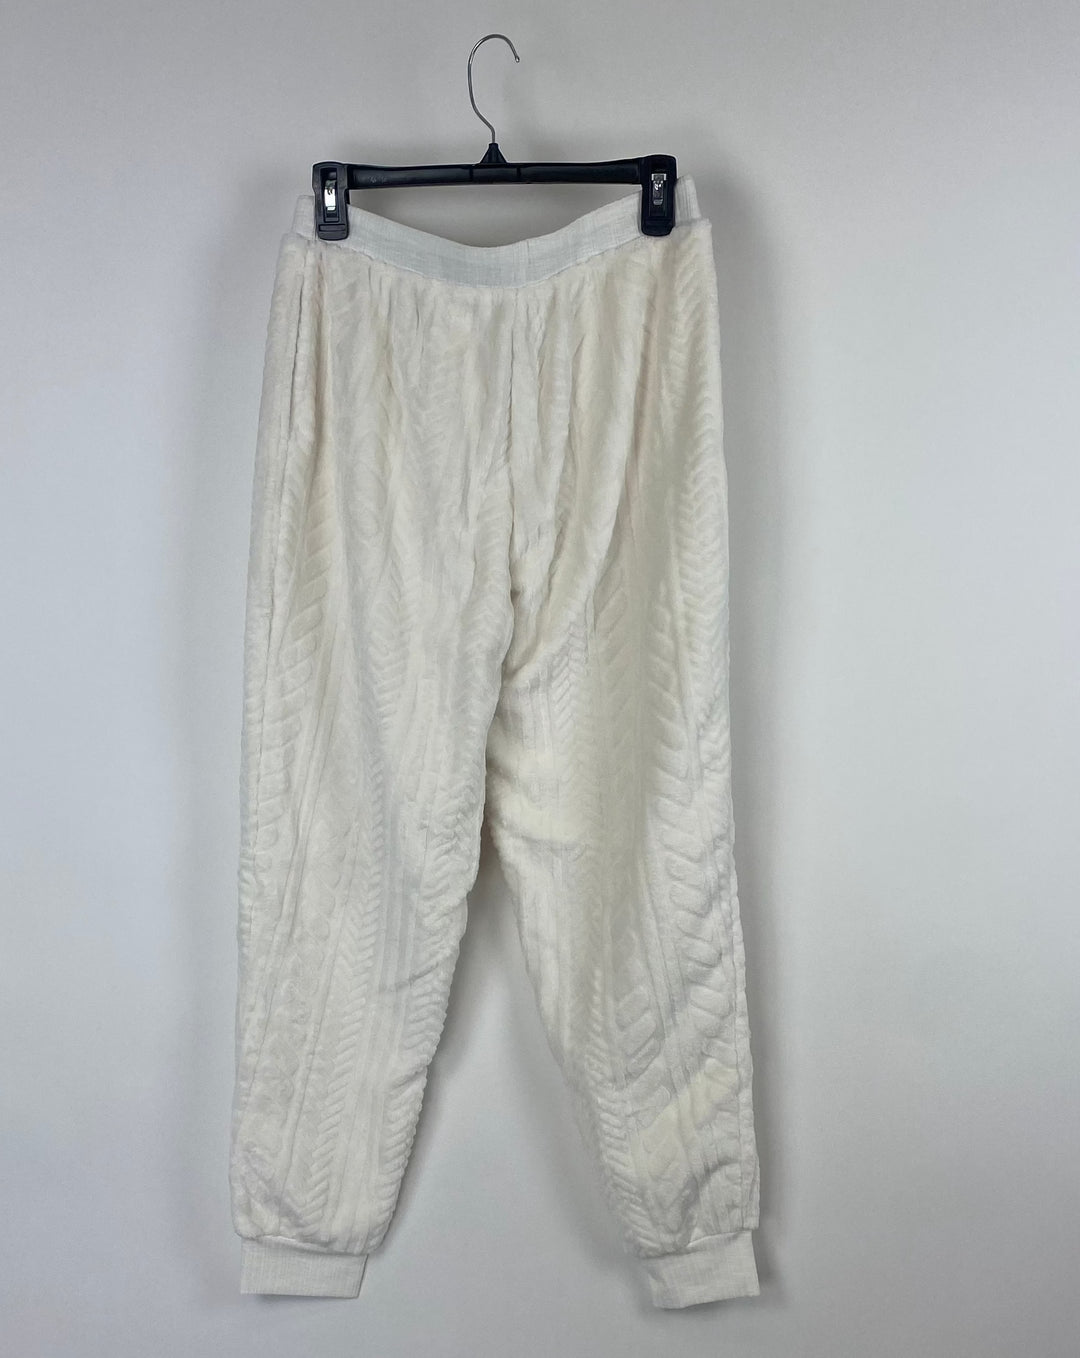 White Fleece Pants - Small